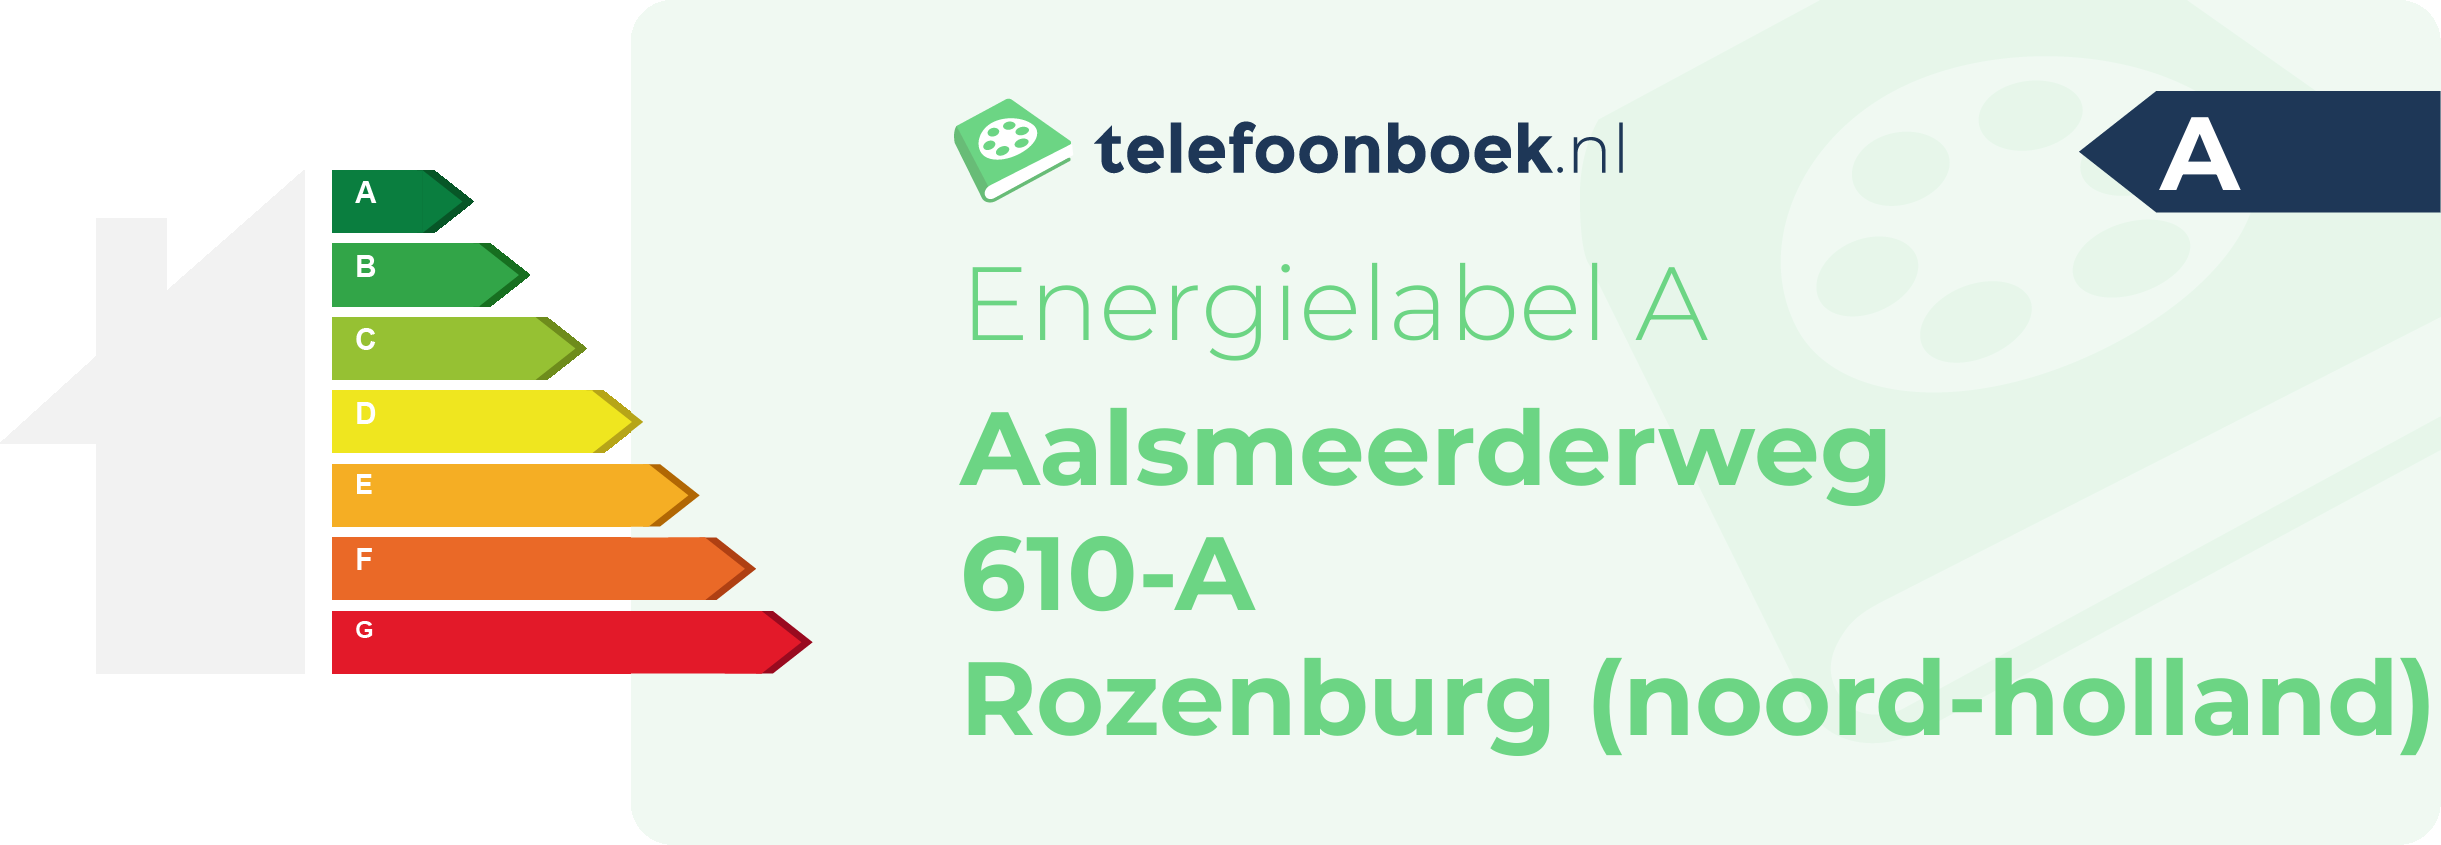 Energielabel Aalsmeerderweg 610-A Rozenburg (Noord-Holland)